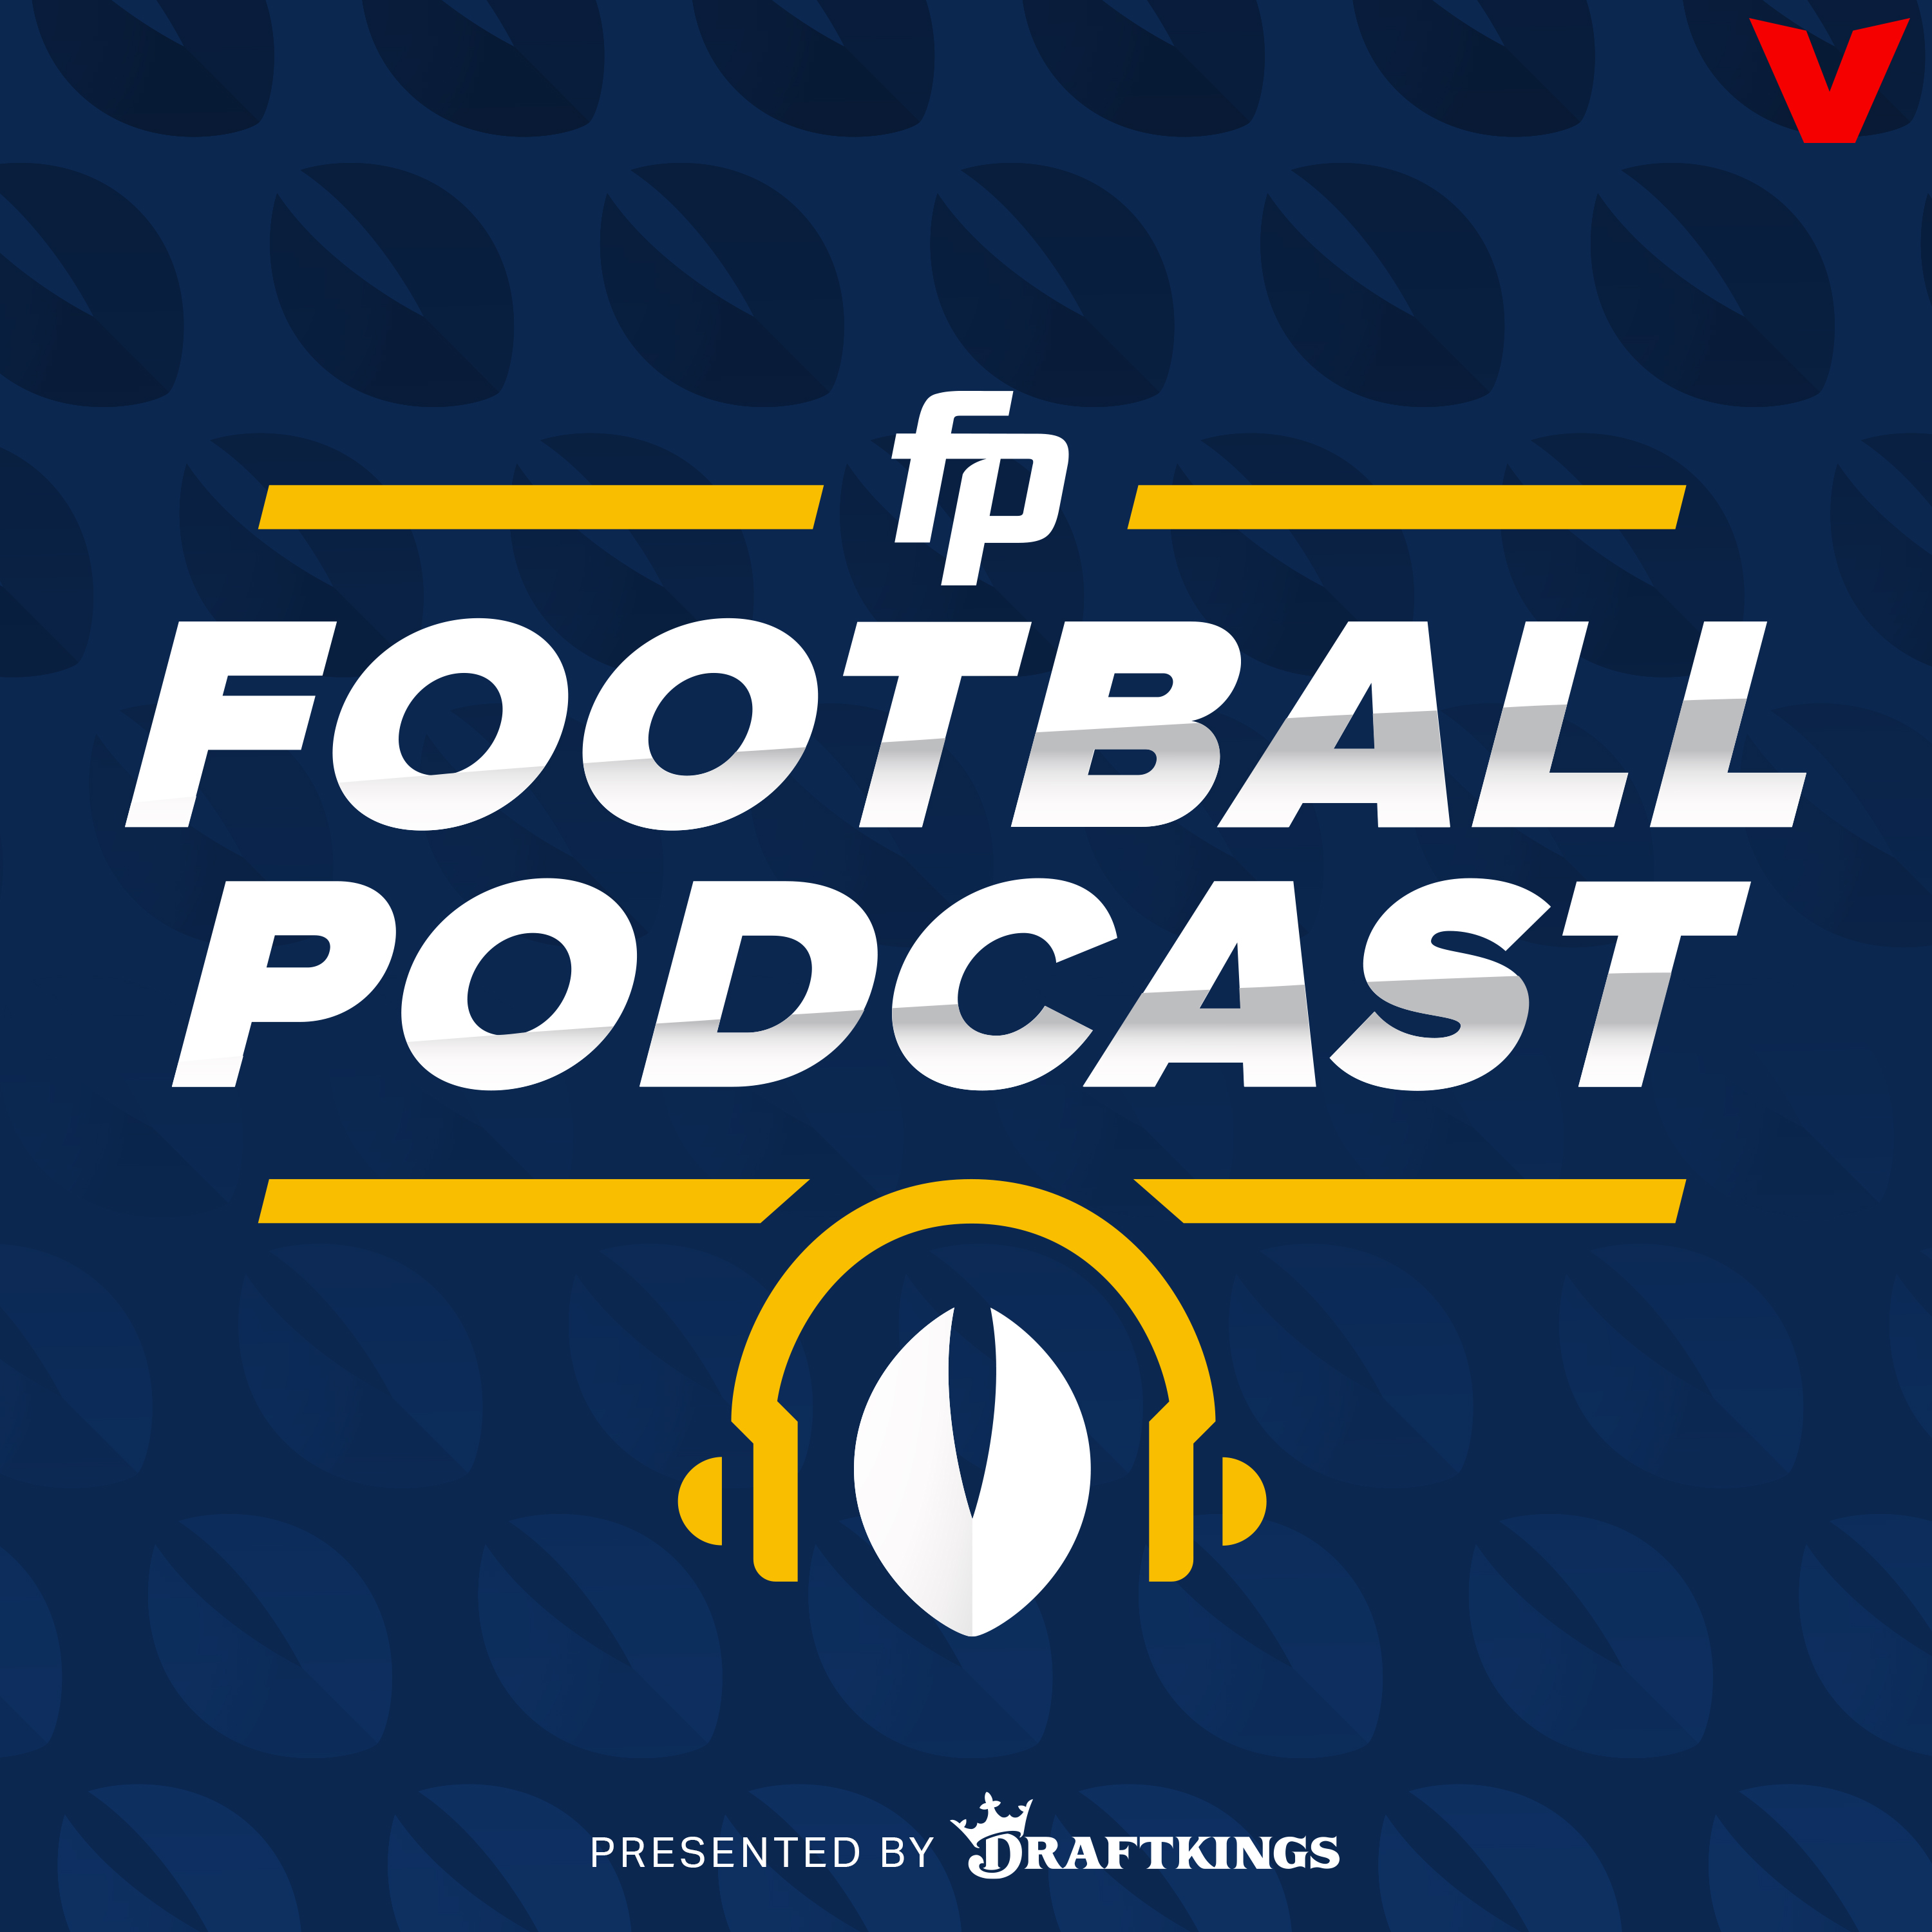 FantasyPros - Fantasy Football Podcast podcast show image